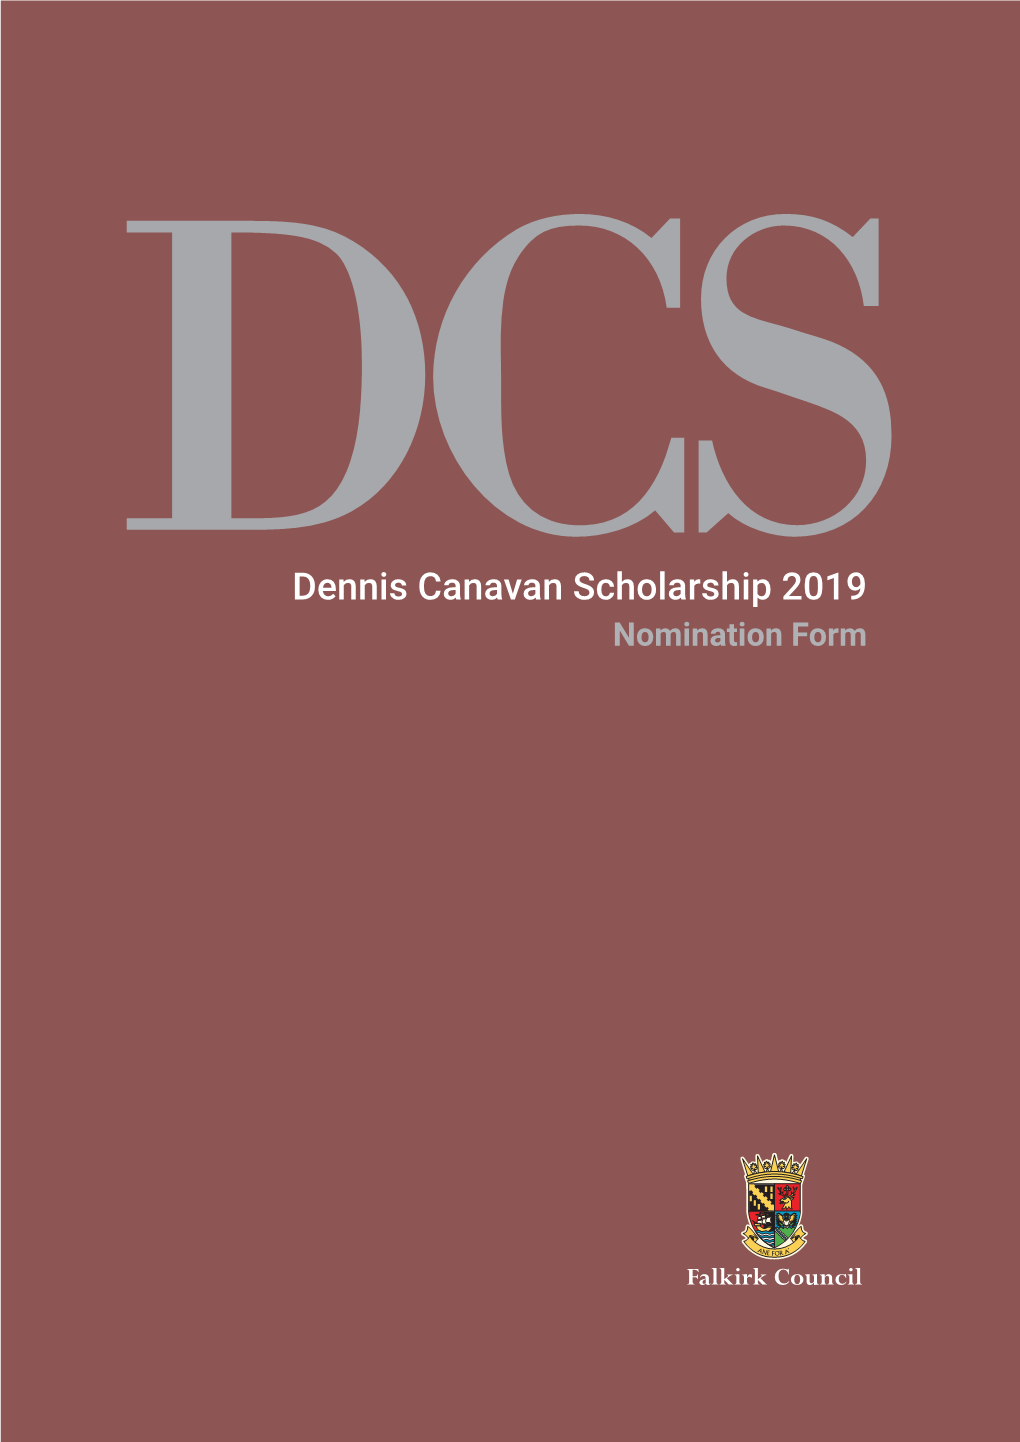 Dennis Canavan Scholarship Form 2019